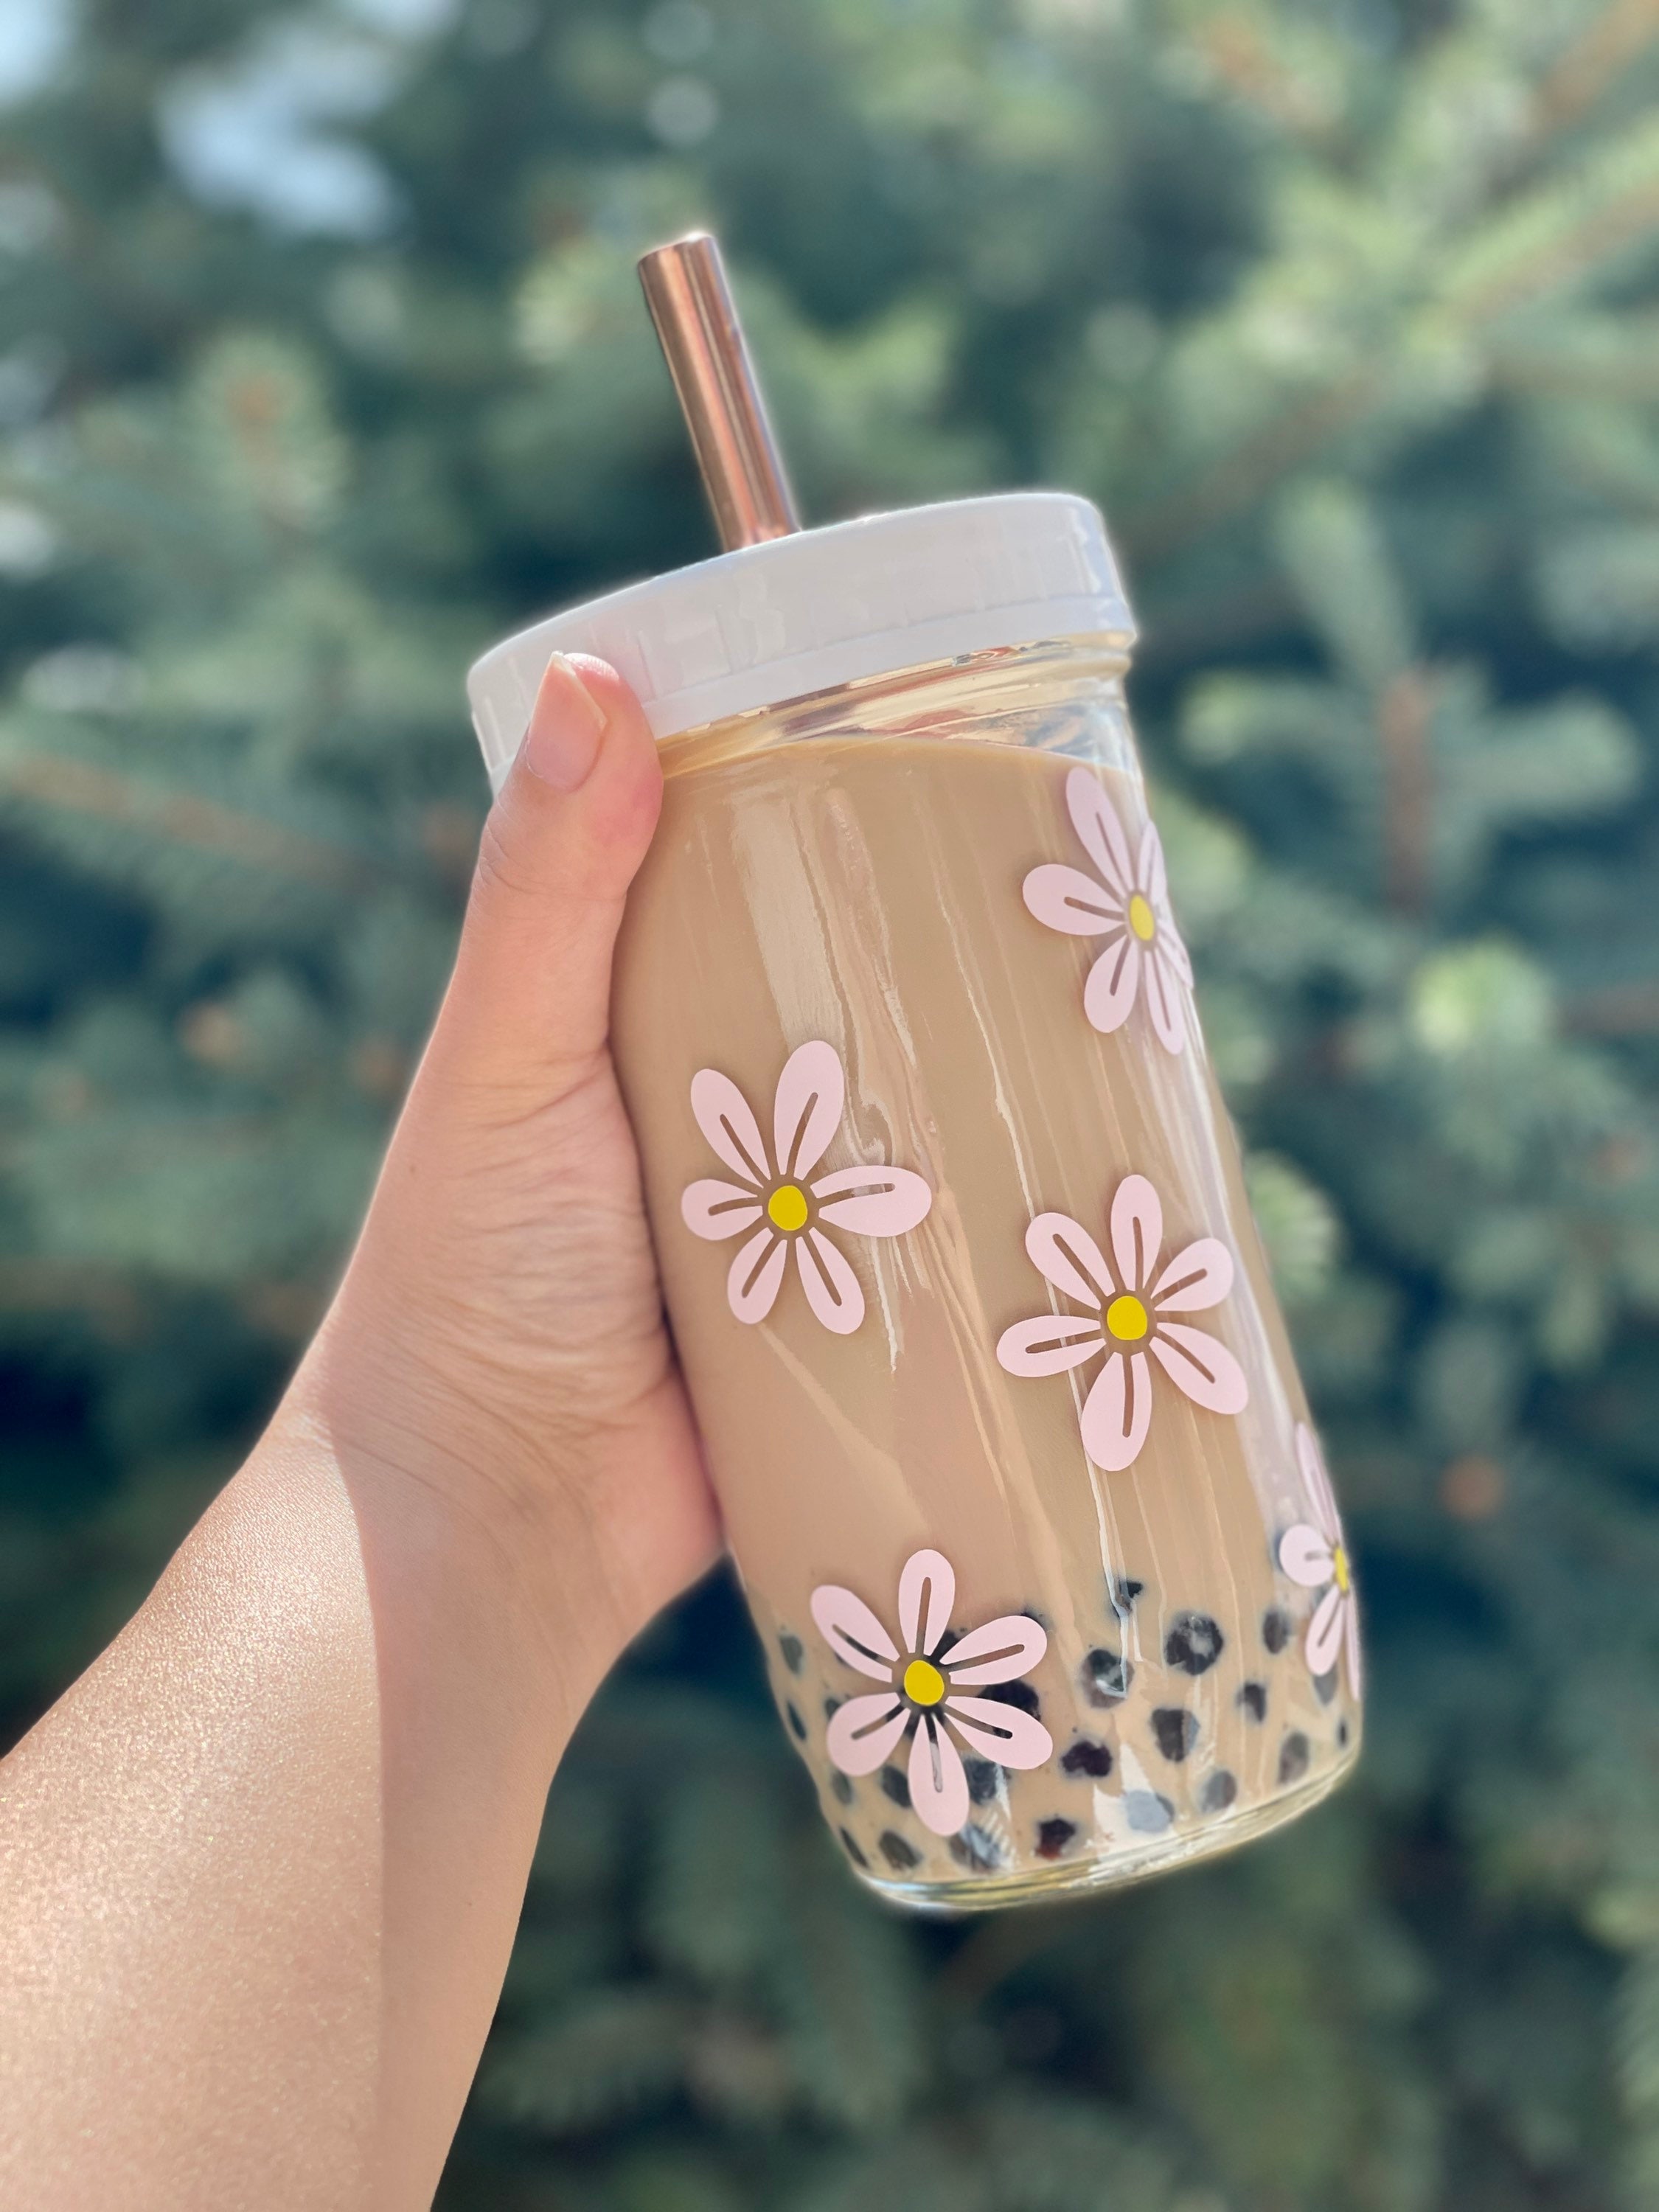 Daisy Reusable Bubble Tea Cup Boba Tea/smoothie Glass Cup With